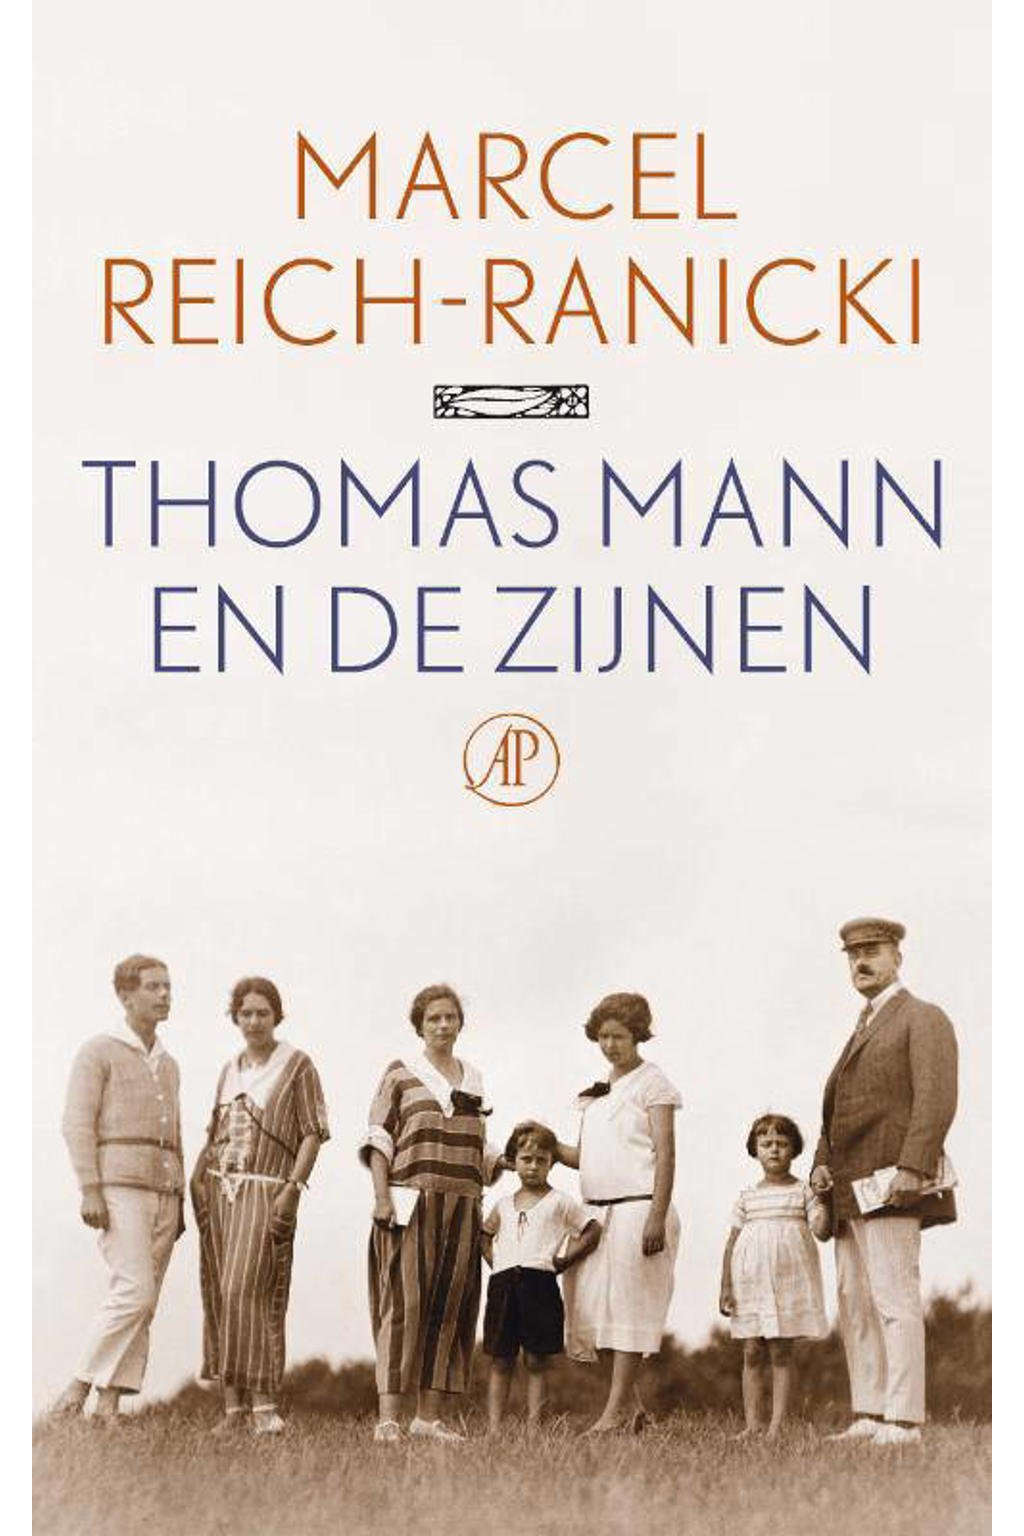 Thomas Mann en de zijnen - Marcel Reich-Ranicki